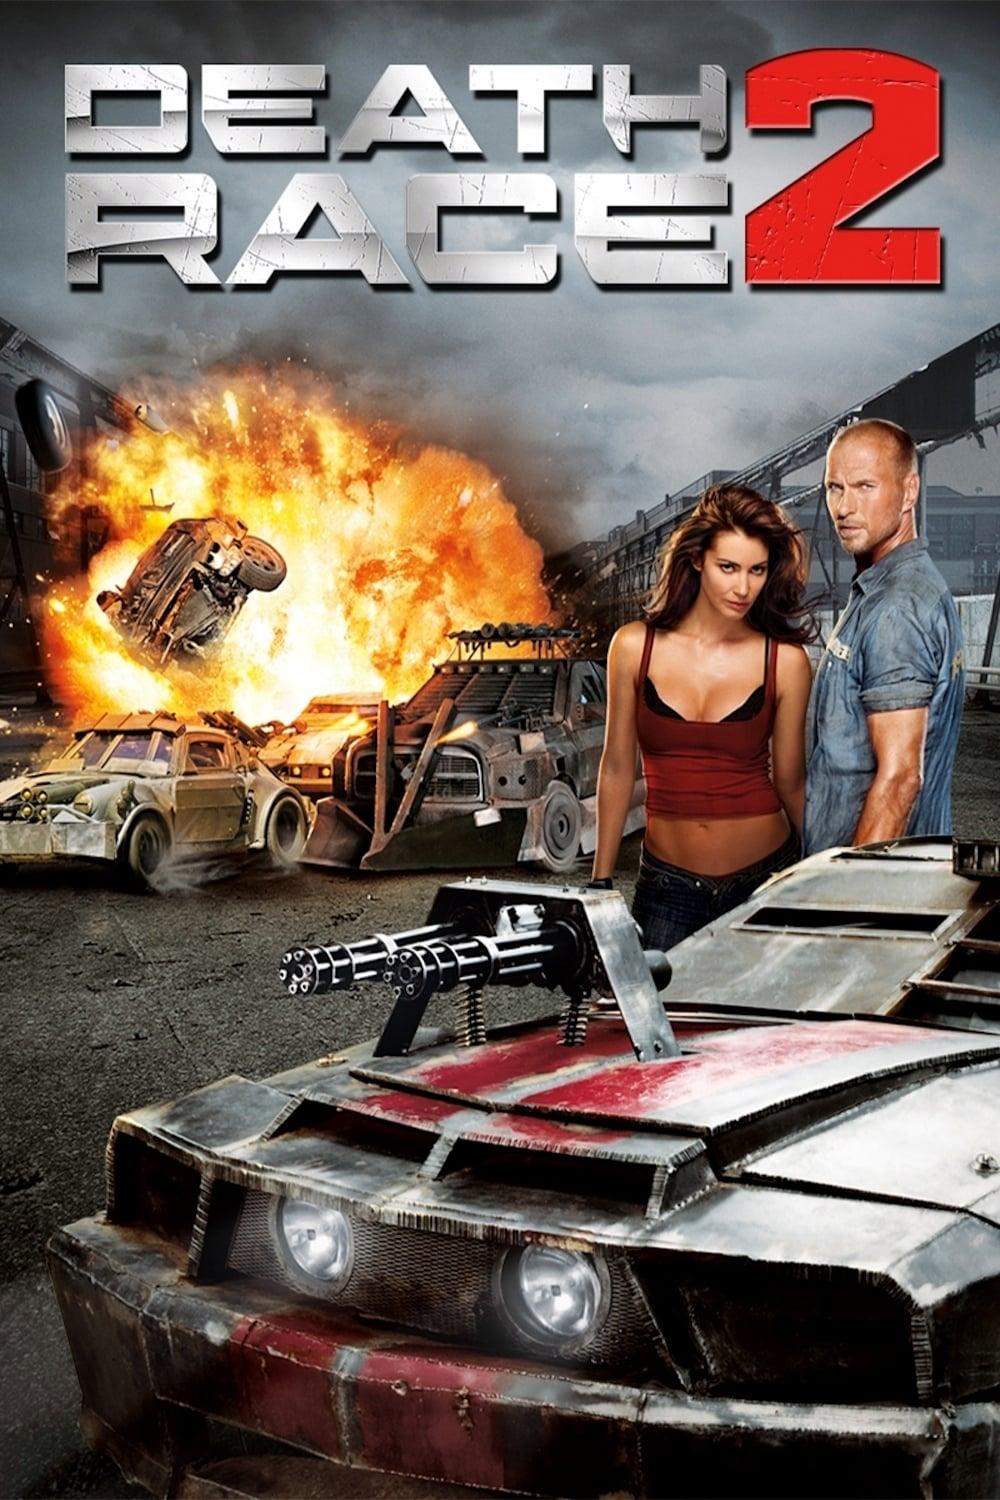 Death Race 2 poster